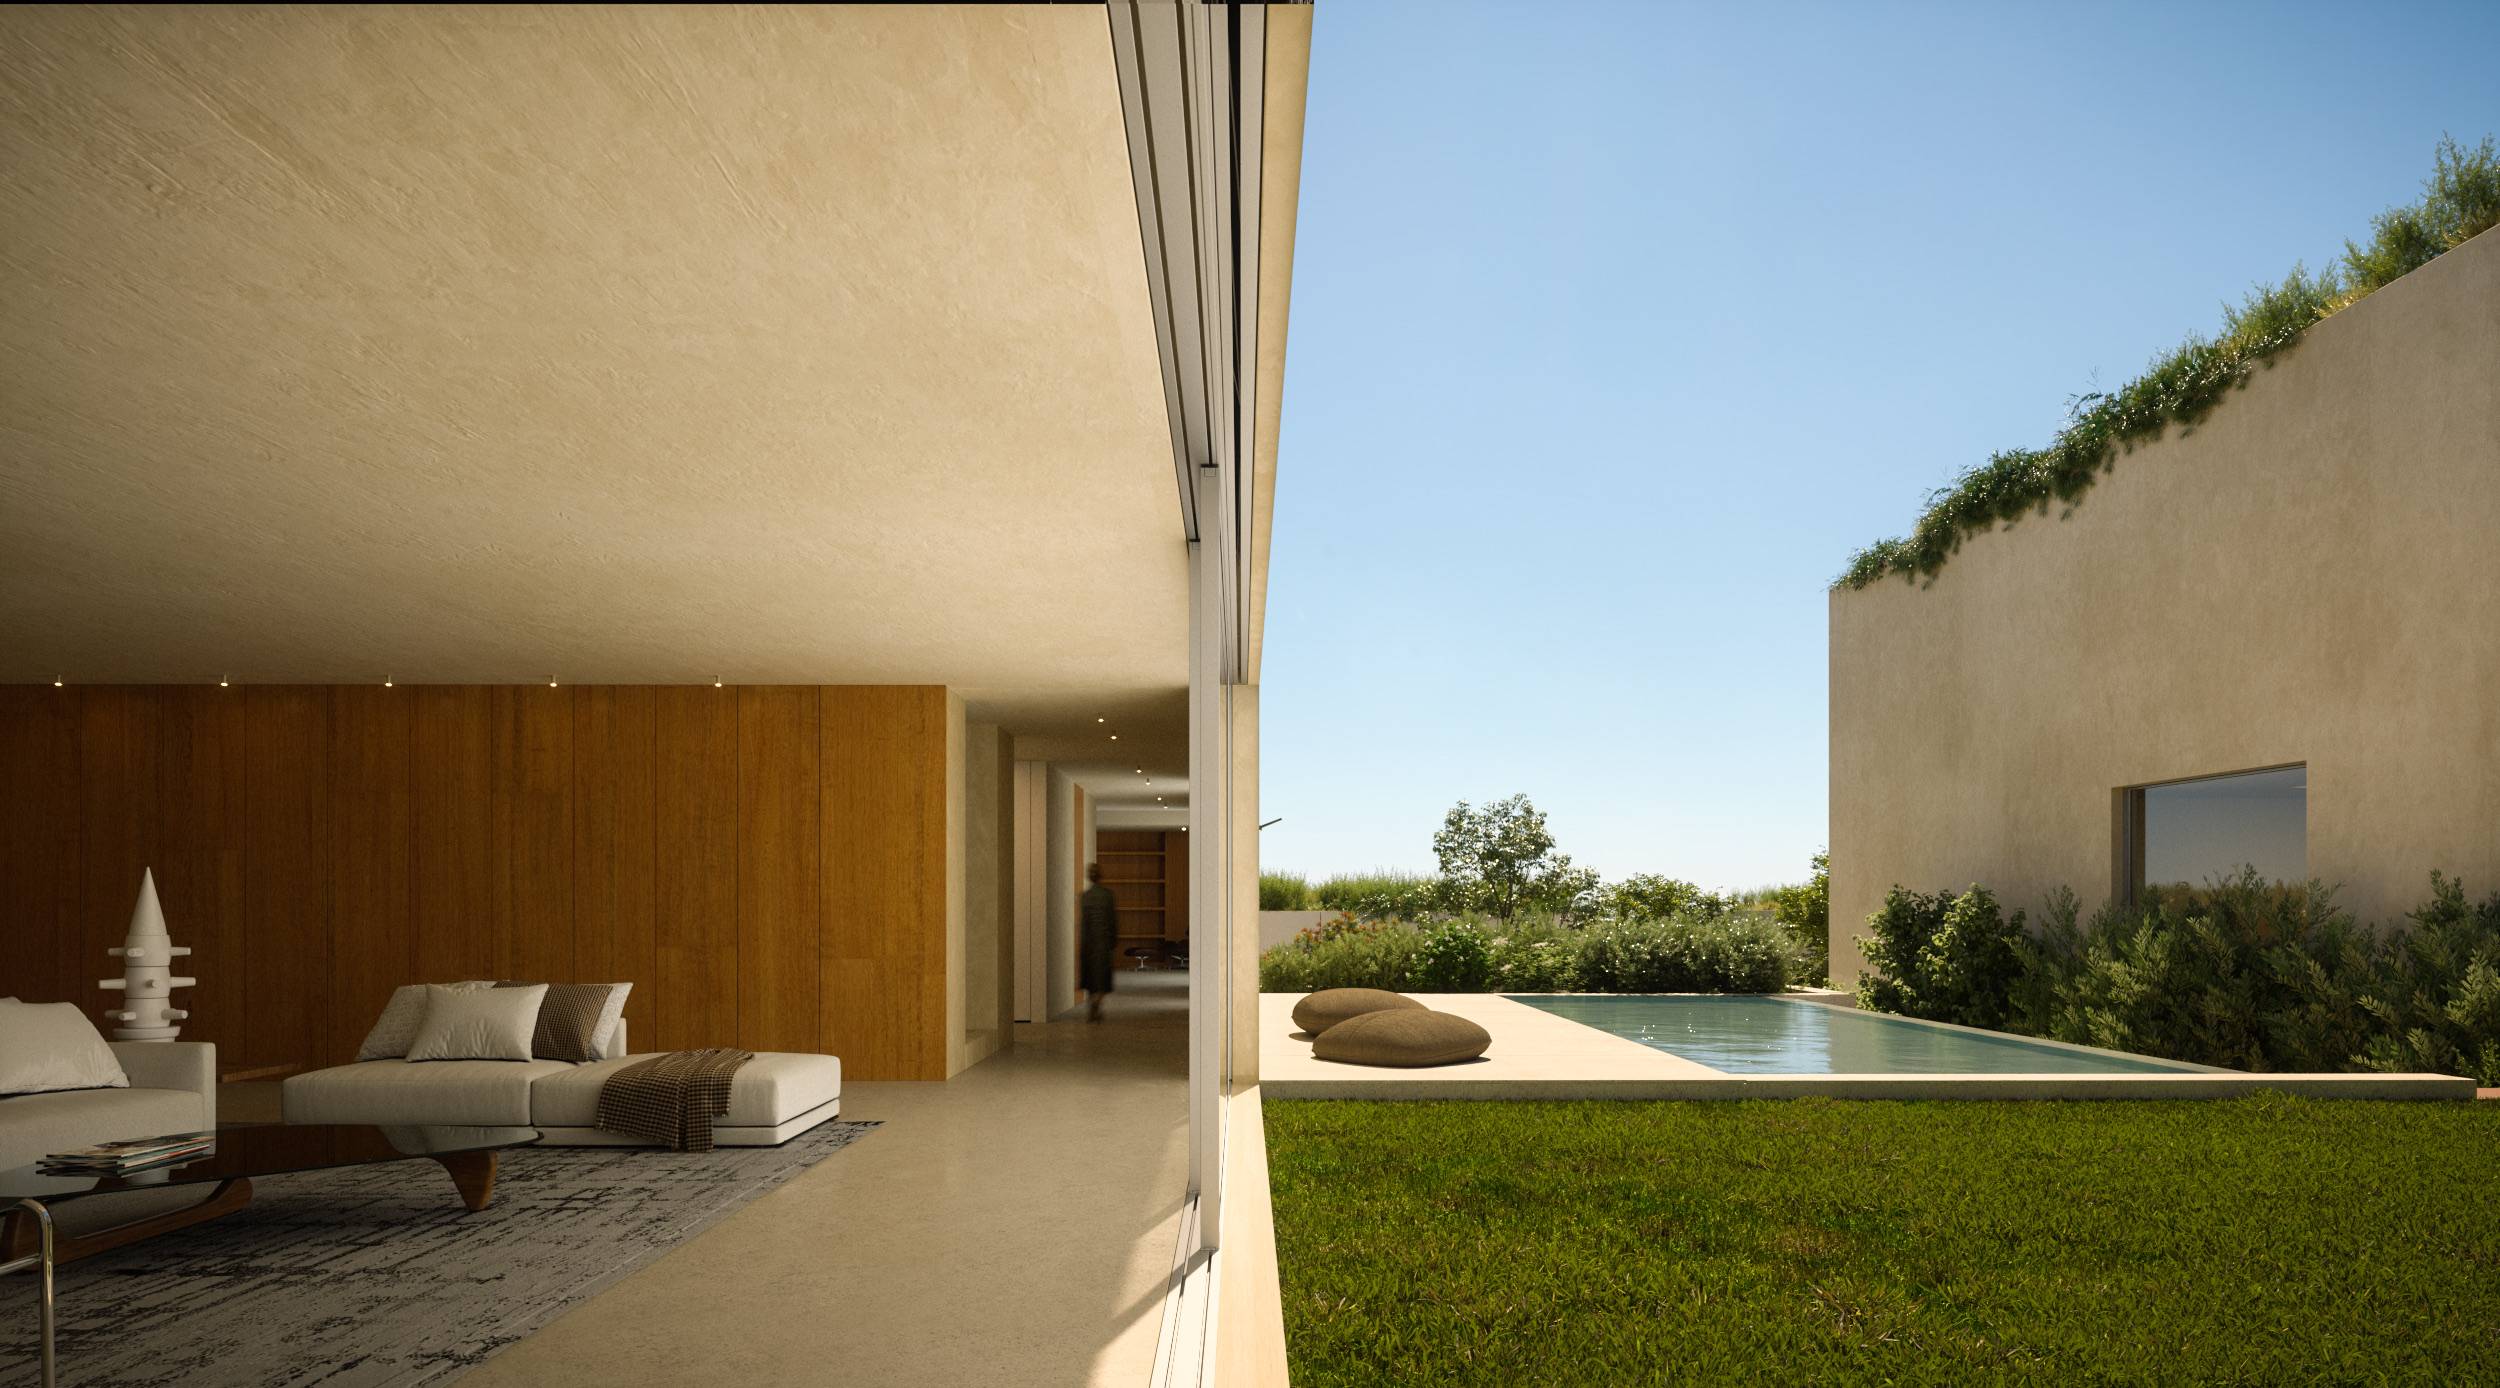 3+1 Bedroom Villas with private pool in Exclusive Condominium in Prime Cascais location | New Development